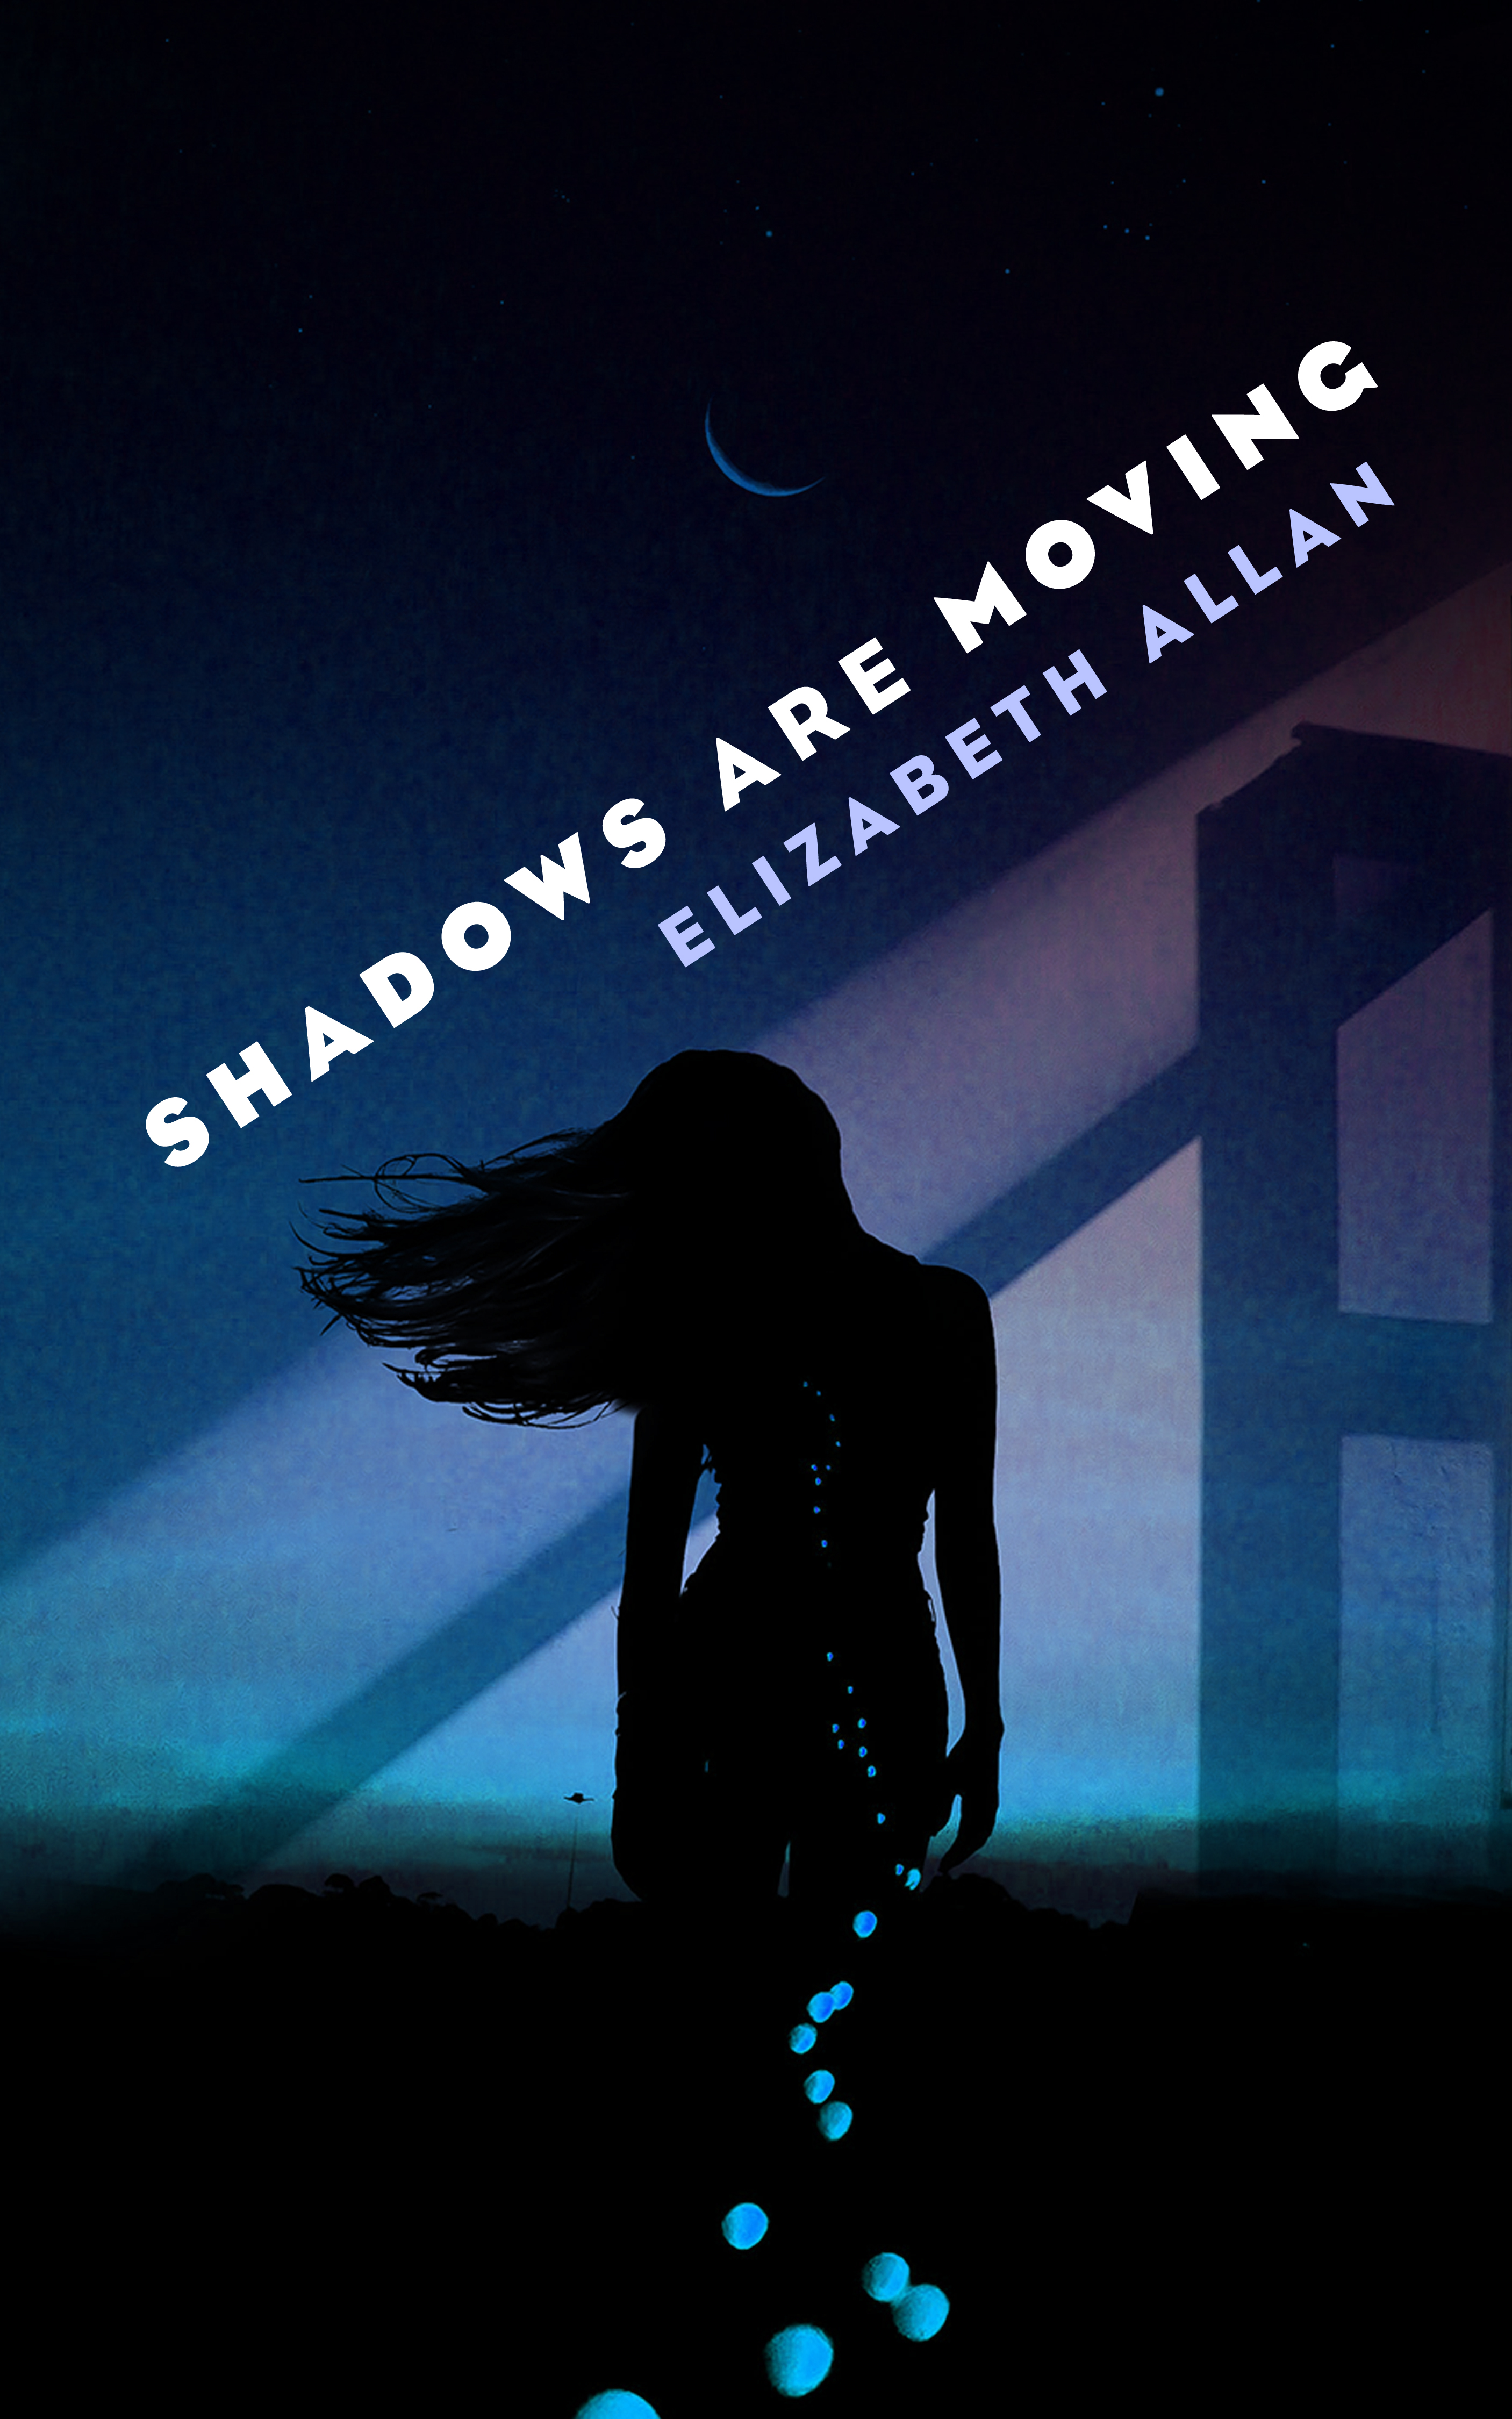 Shadows Are Moving by Elizabeth Allan